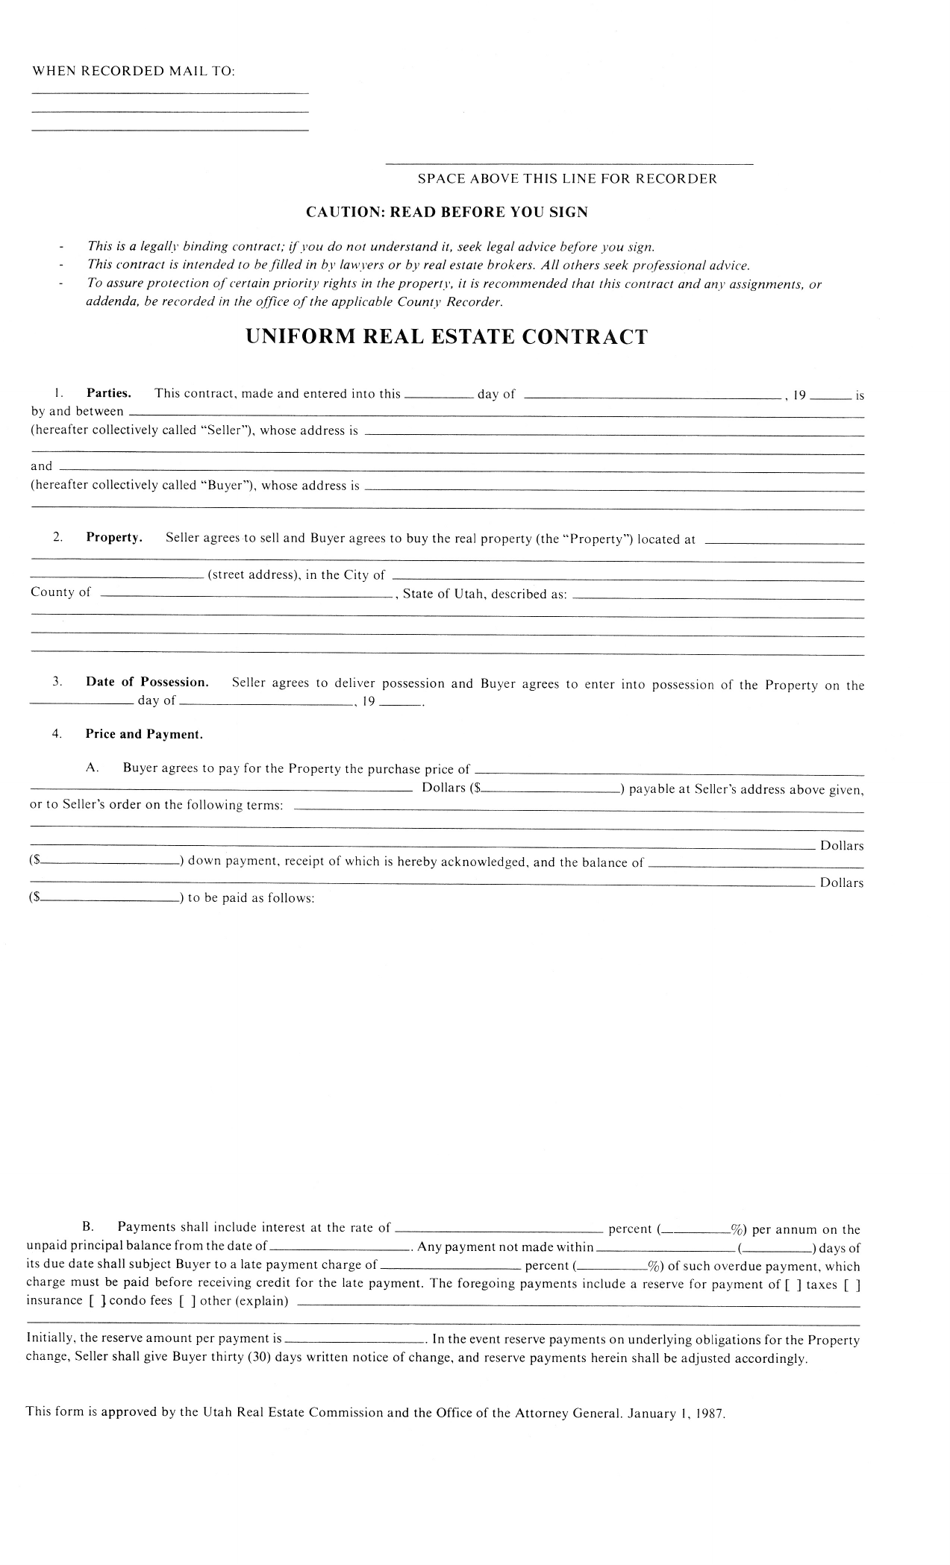 Uniform Real Estate Contract - Utah, Page 1